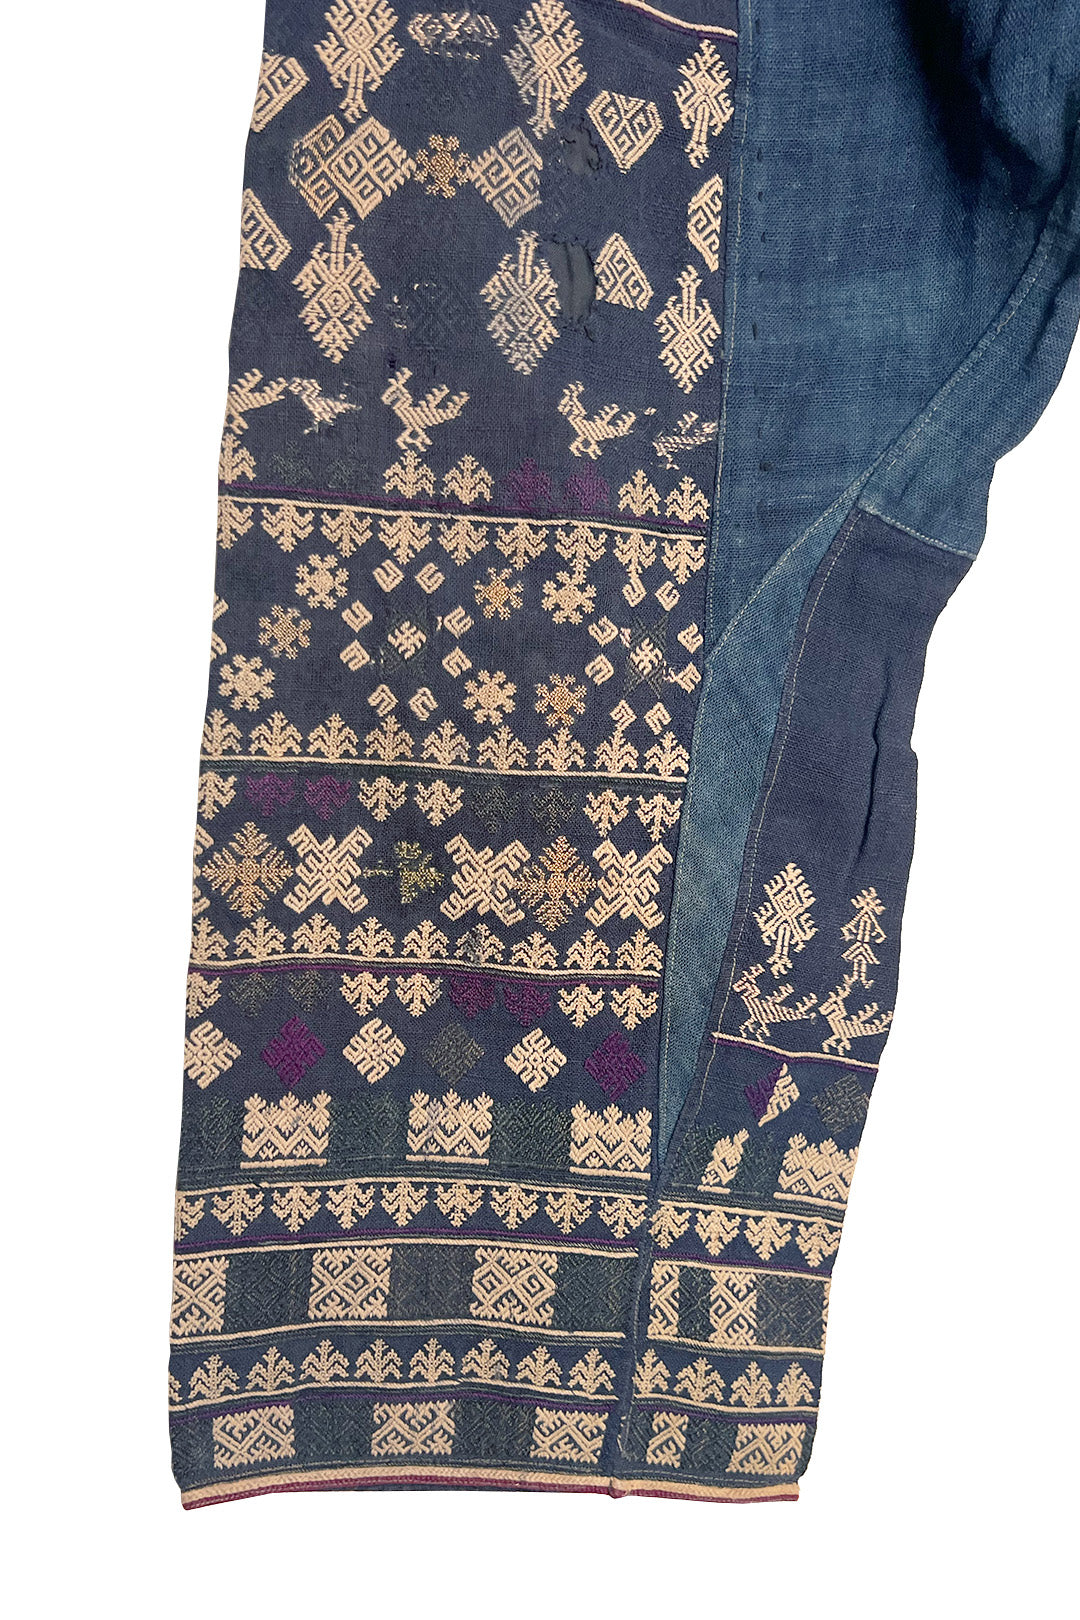 Yao Embroidered Pants